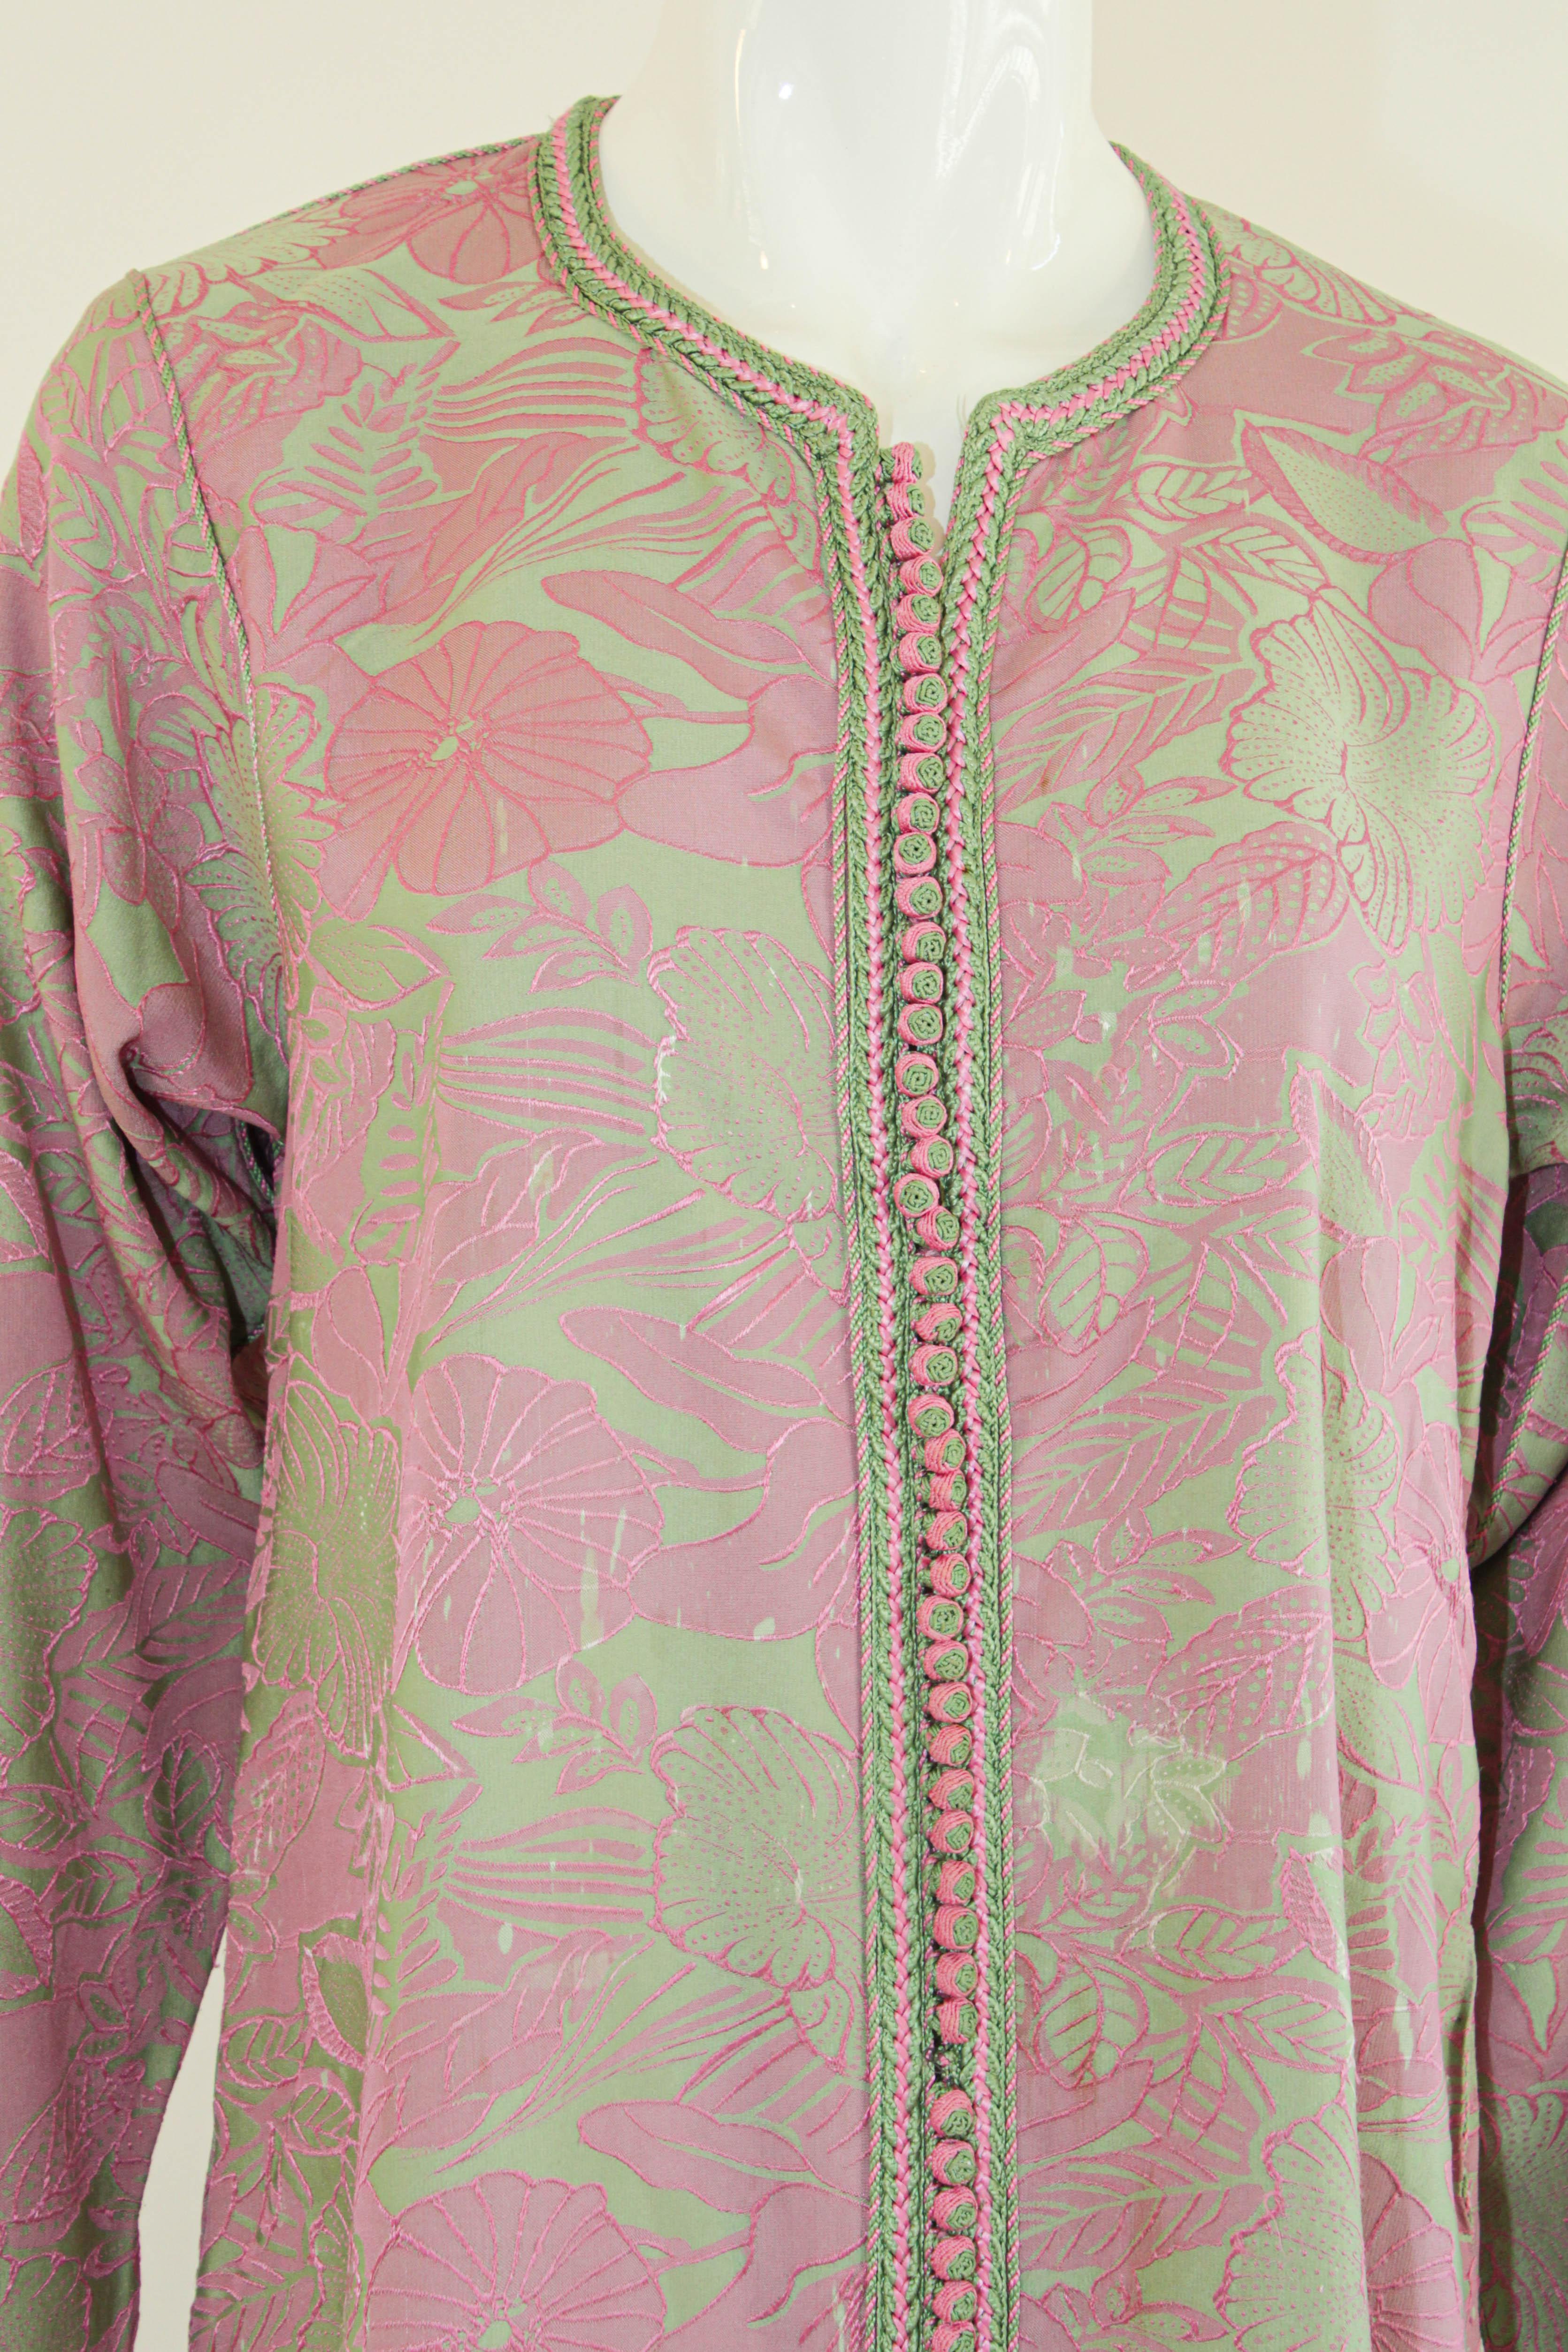 Caftan marocain vintage avec bordure rose et verte en vente 15